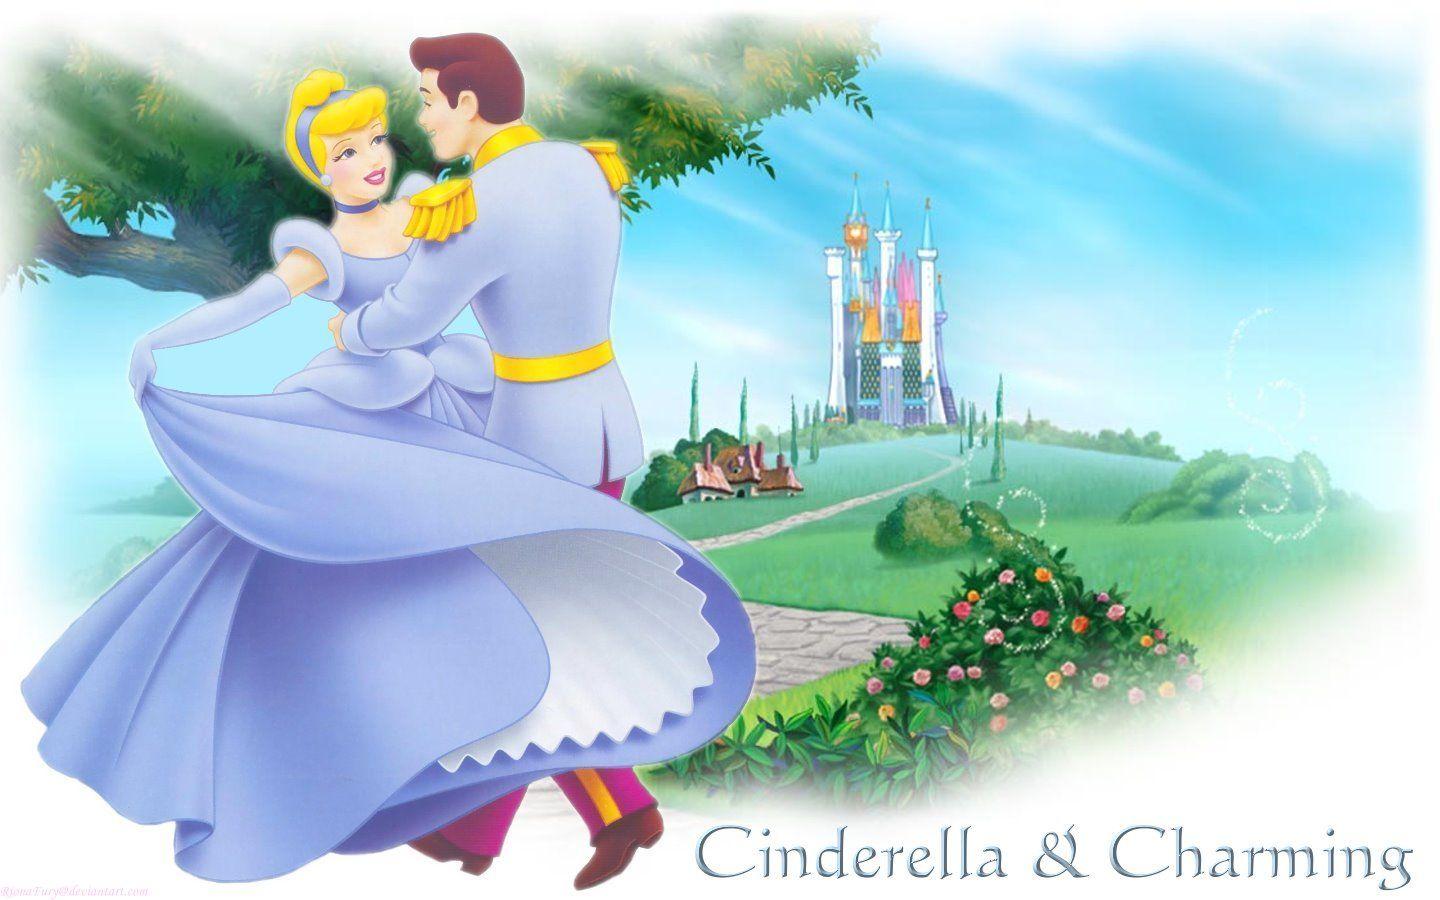 Charming & Cinderella